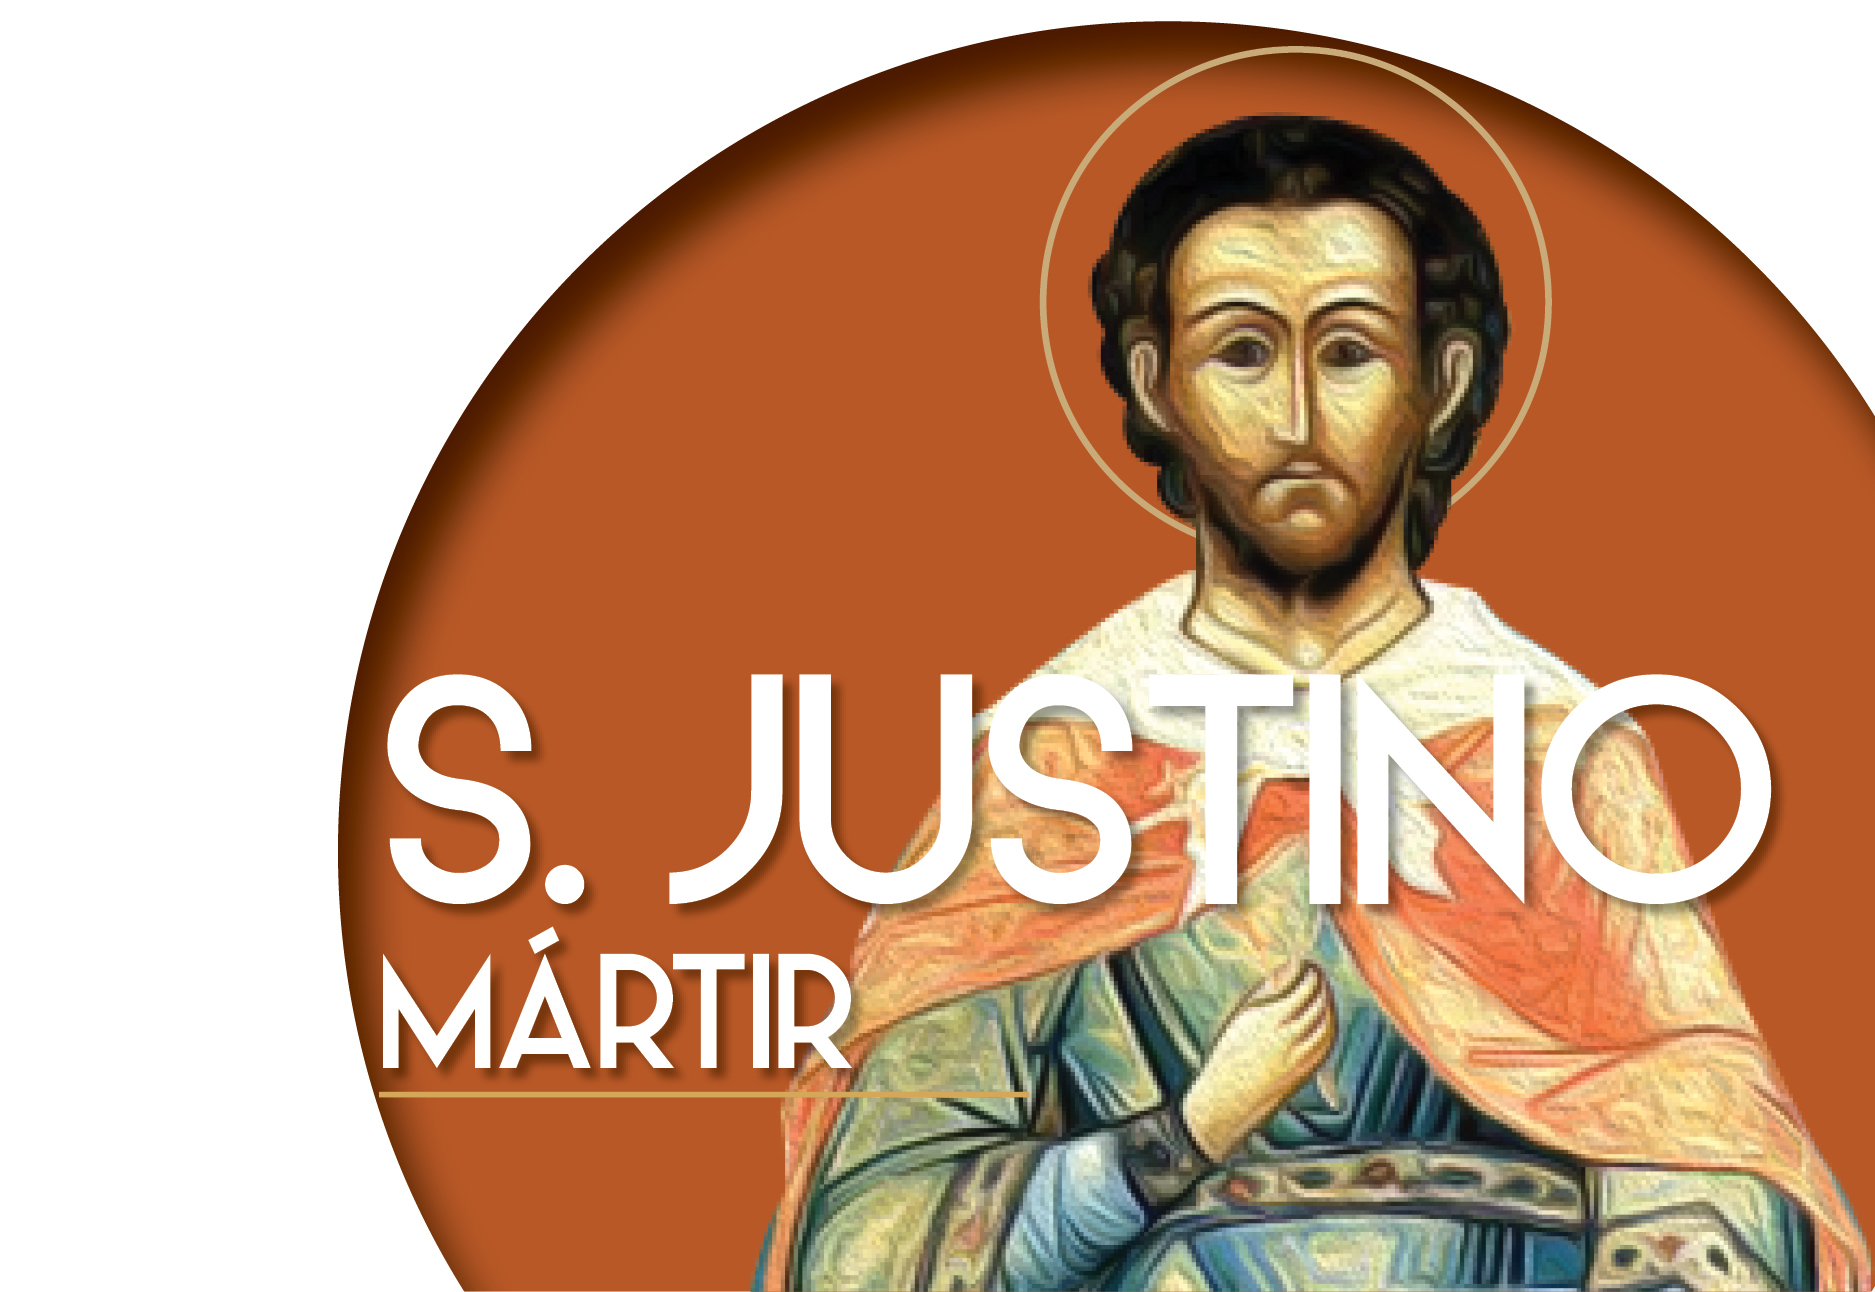 San Justino Mártir